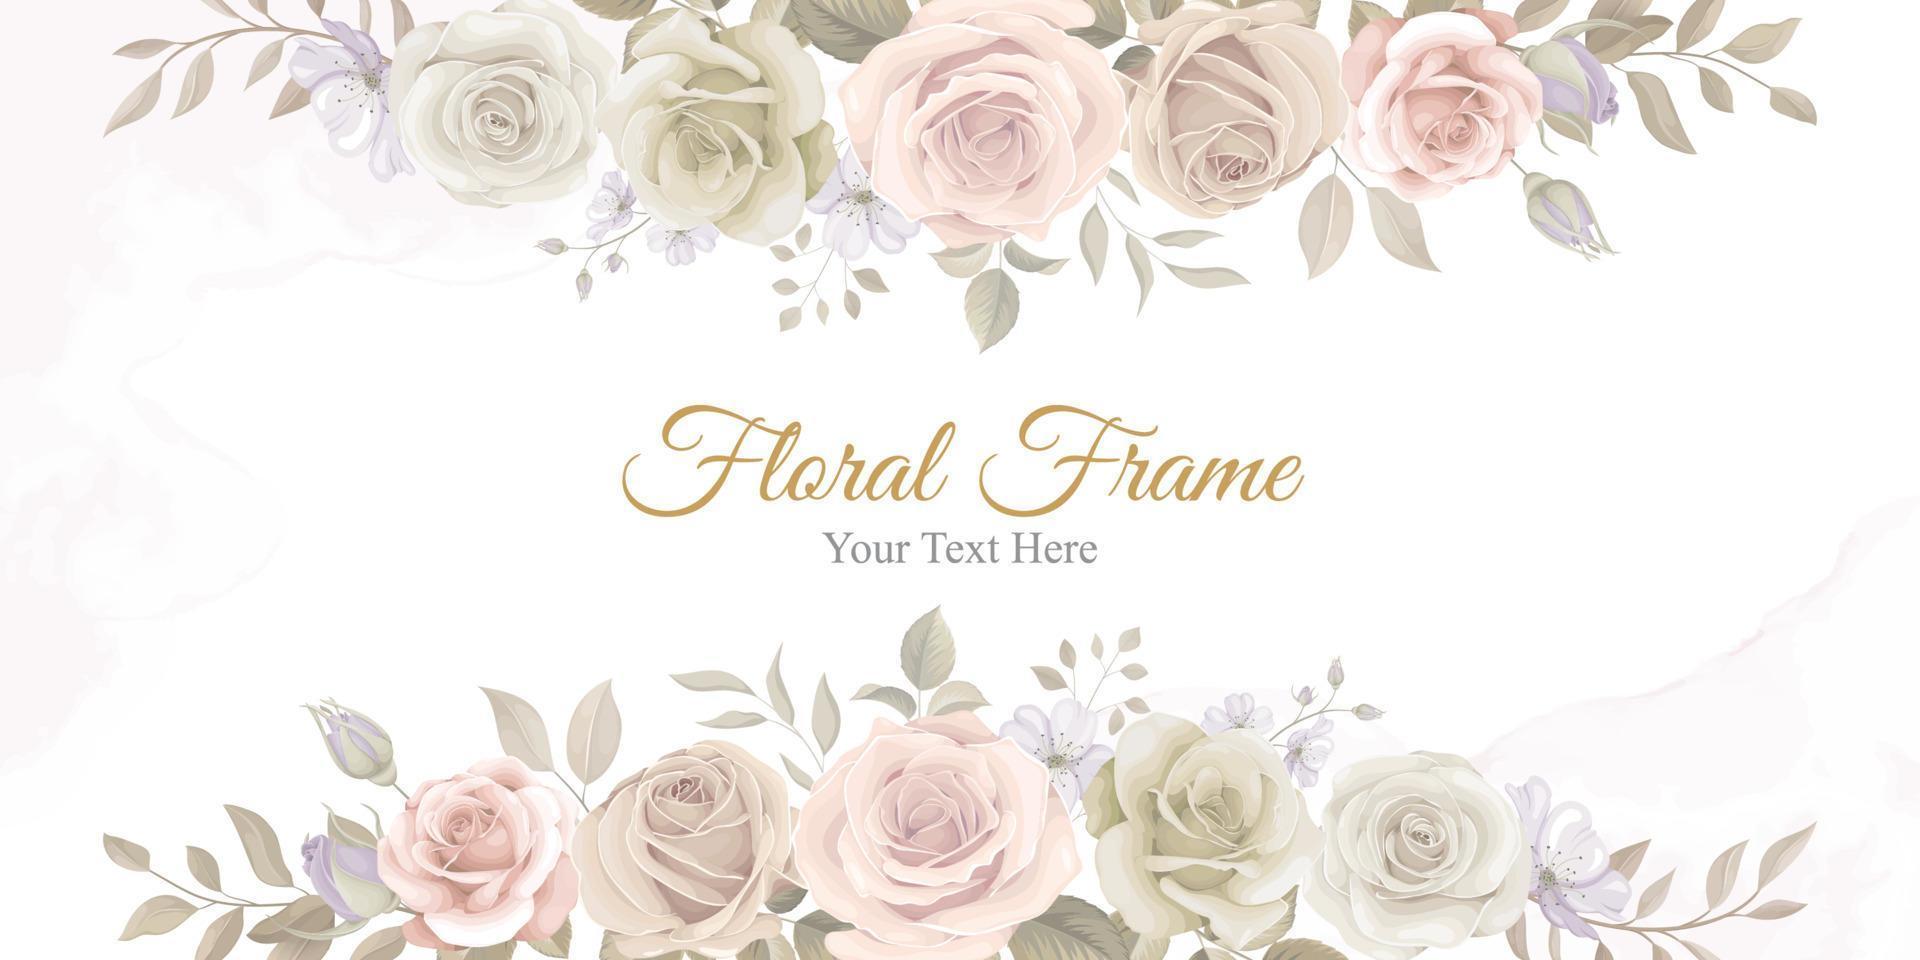 Beautiful floral frame background design vector